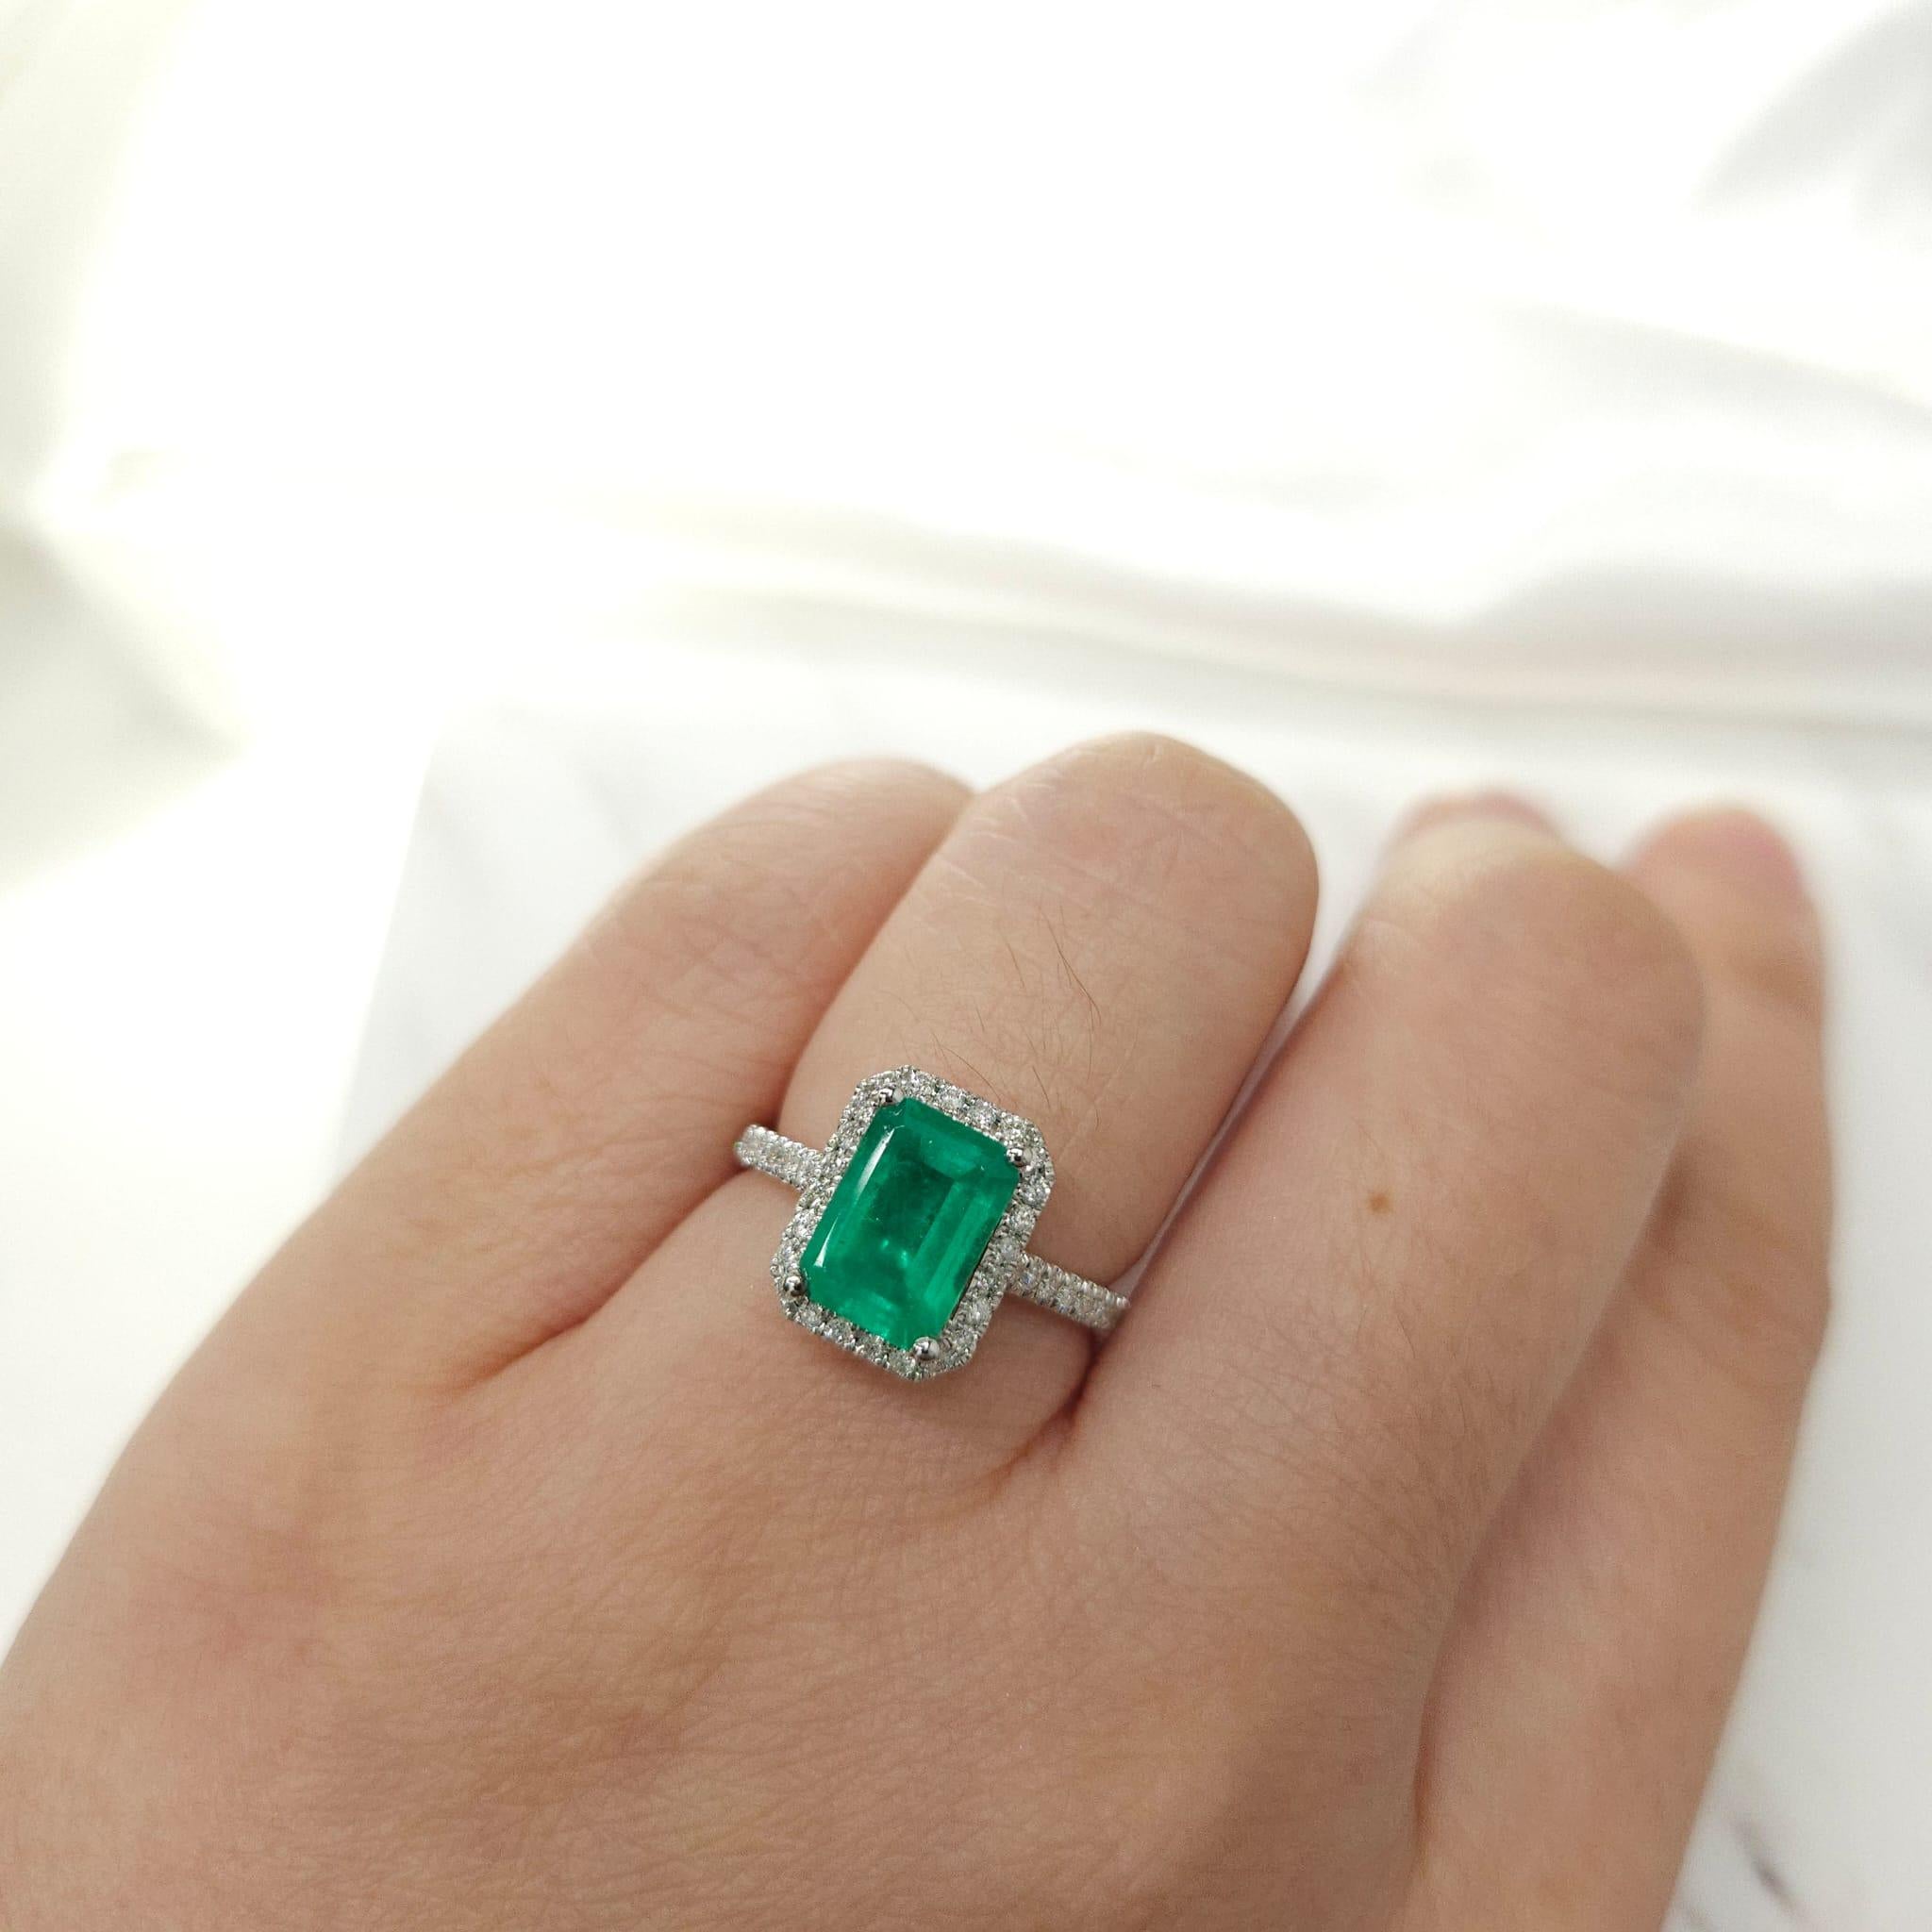 IGI Certified 1.76 Carat Emerald & Diamond Ring in 18K White Gold For Sale 4